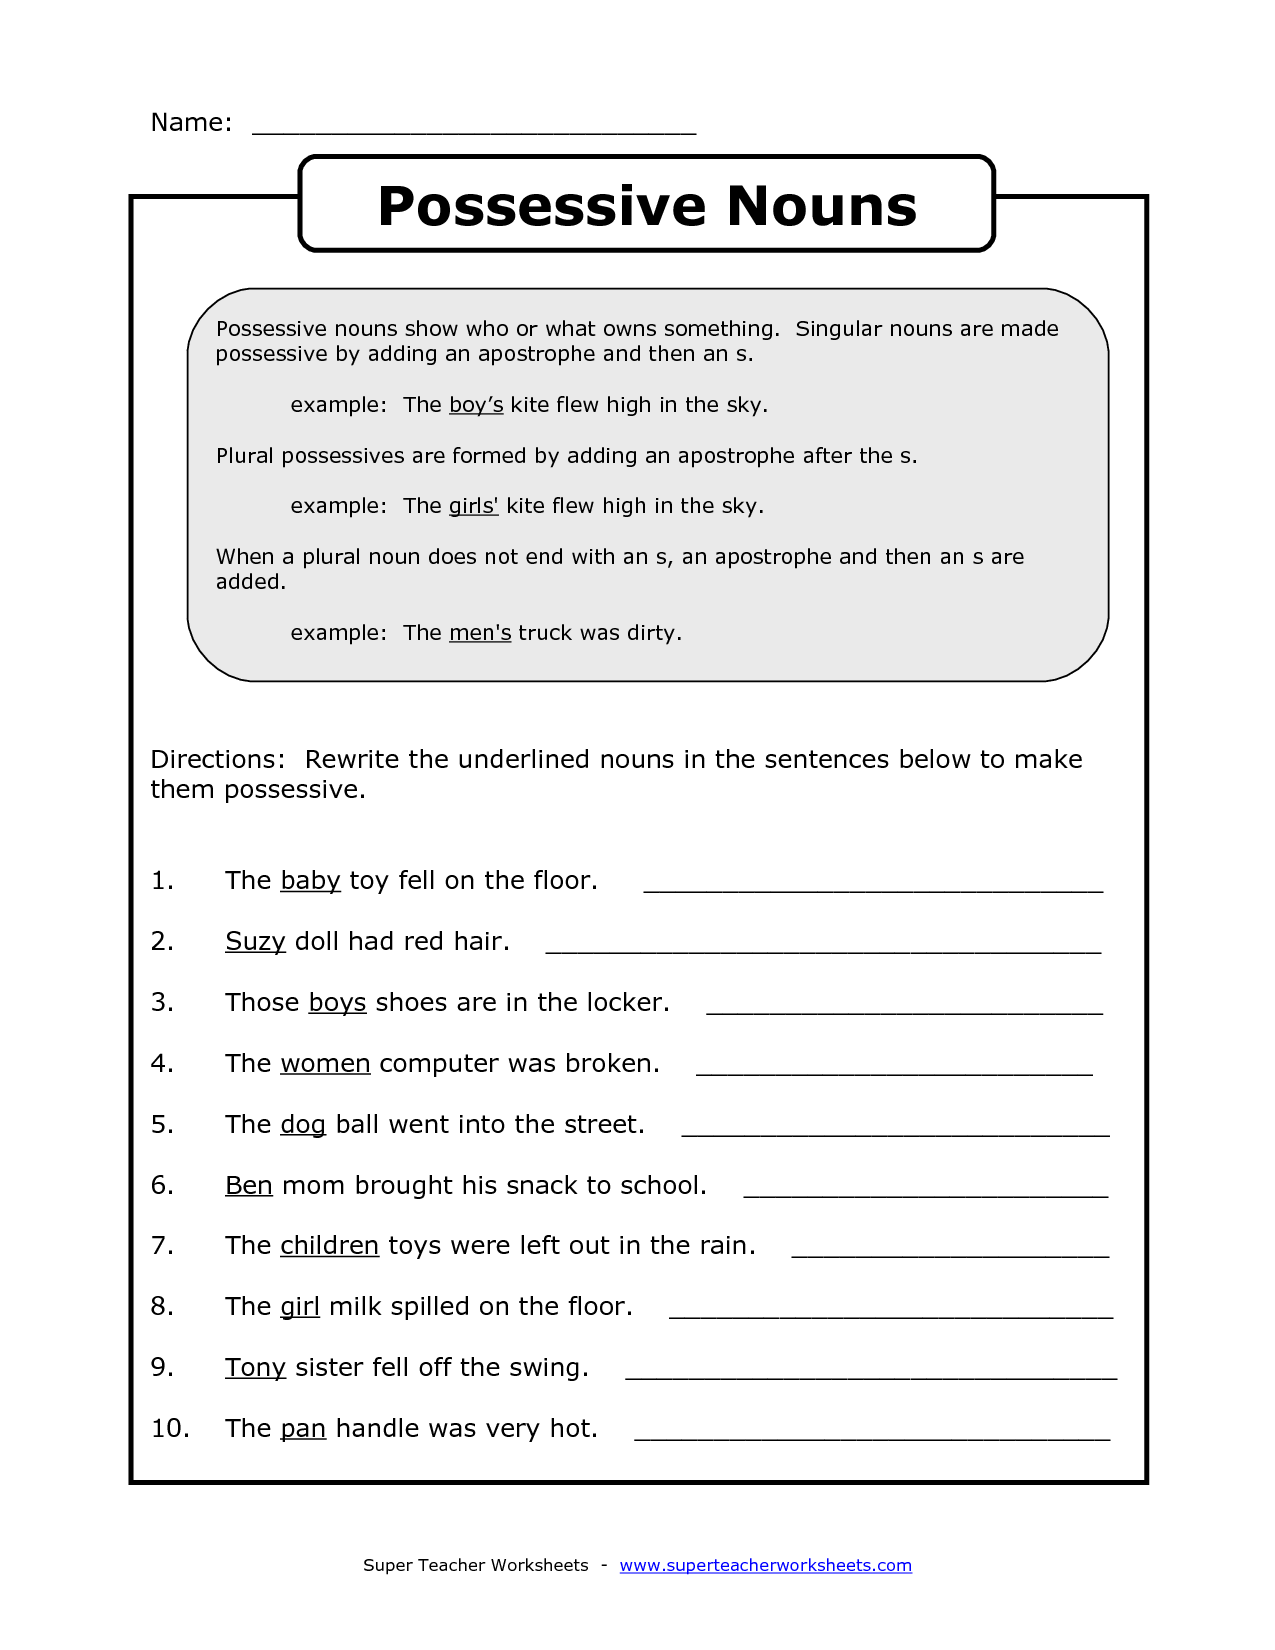 Plural Possessive Nouns Worksheets Image